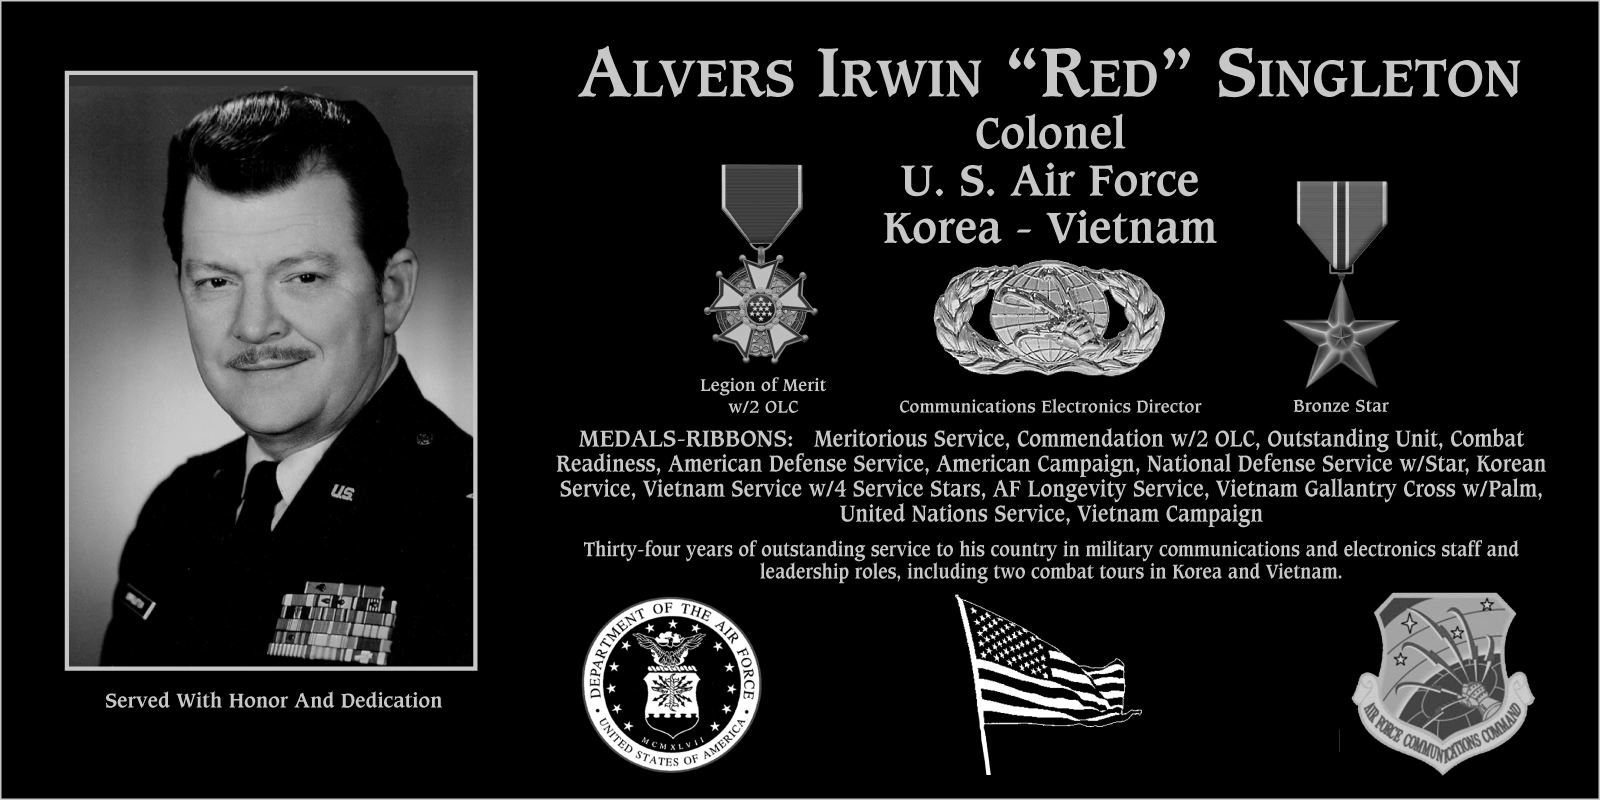 Alvers Irwin “Red” Singleton